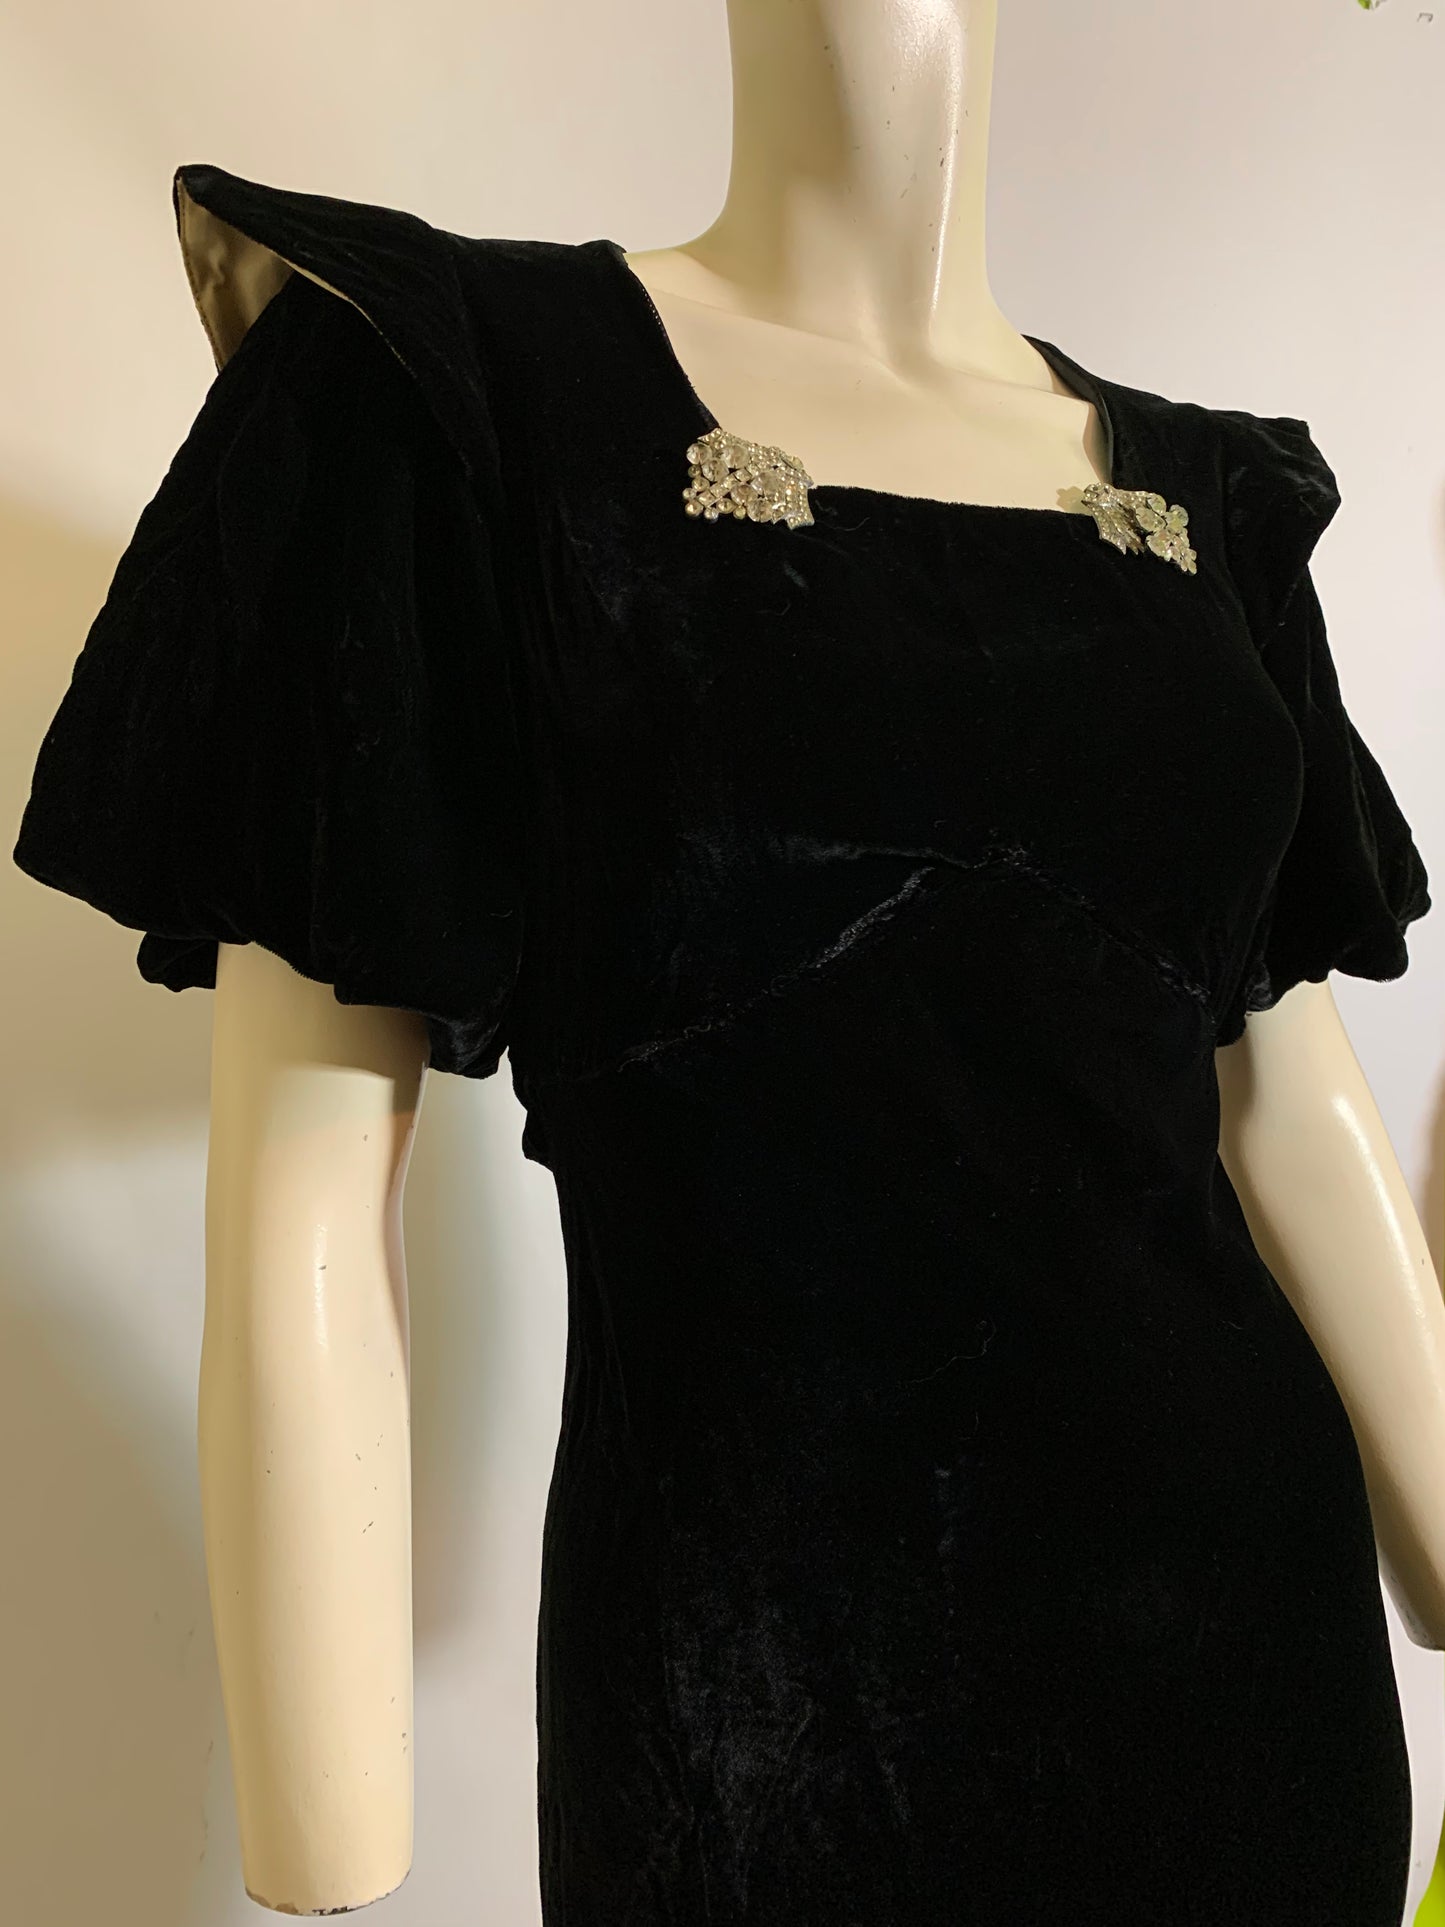 Ebony Silk Velvet Bias Cut Dress with Puff Sleeve and Art Deco Satin Back Shoulder Accents circa 1930s